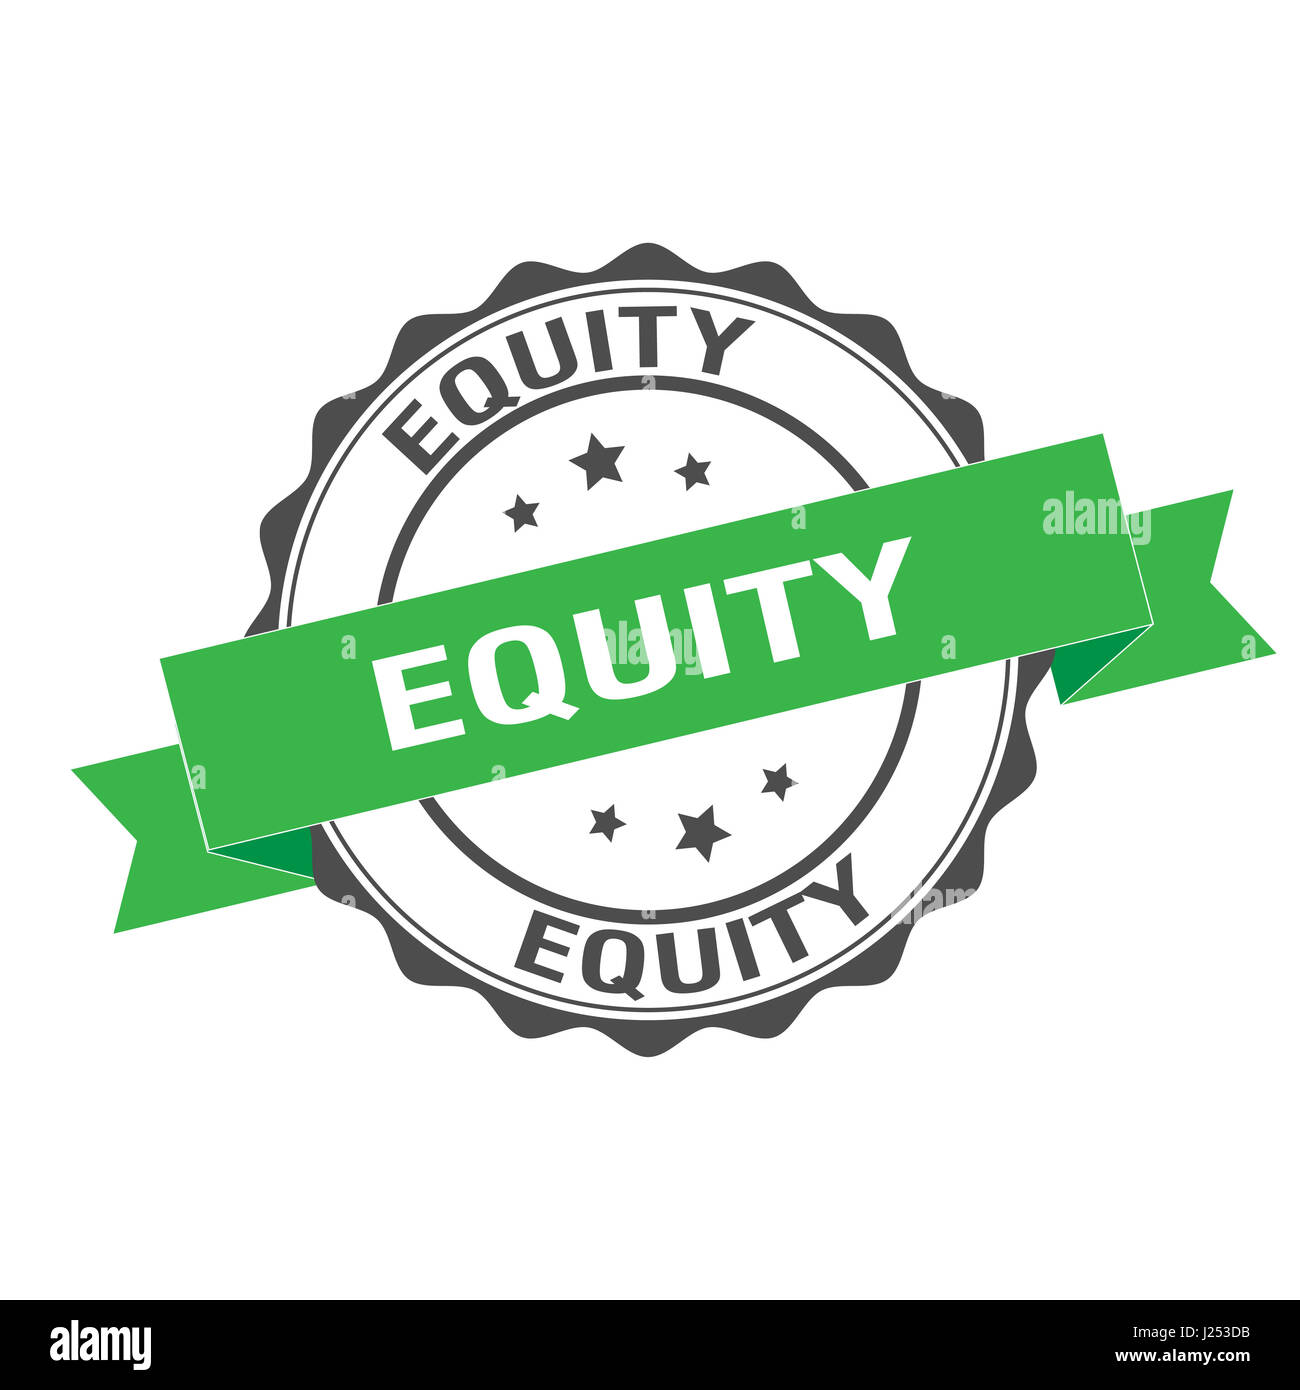 Equity stamp illustration Stock Photo